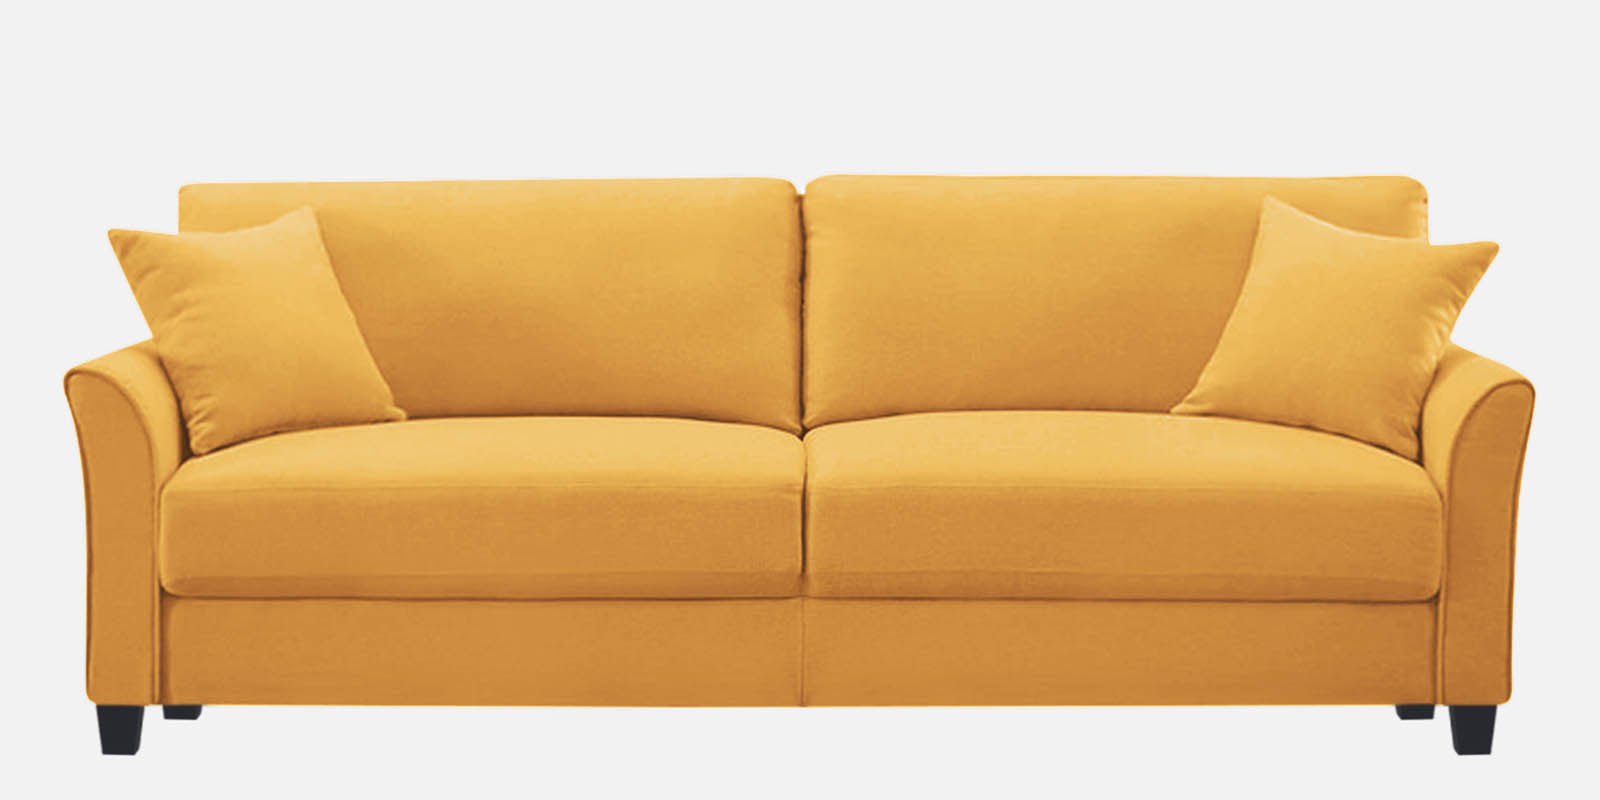 Daroo Velvet 3 Seater Sofa in Turmeric yellow Colour